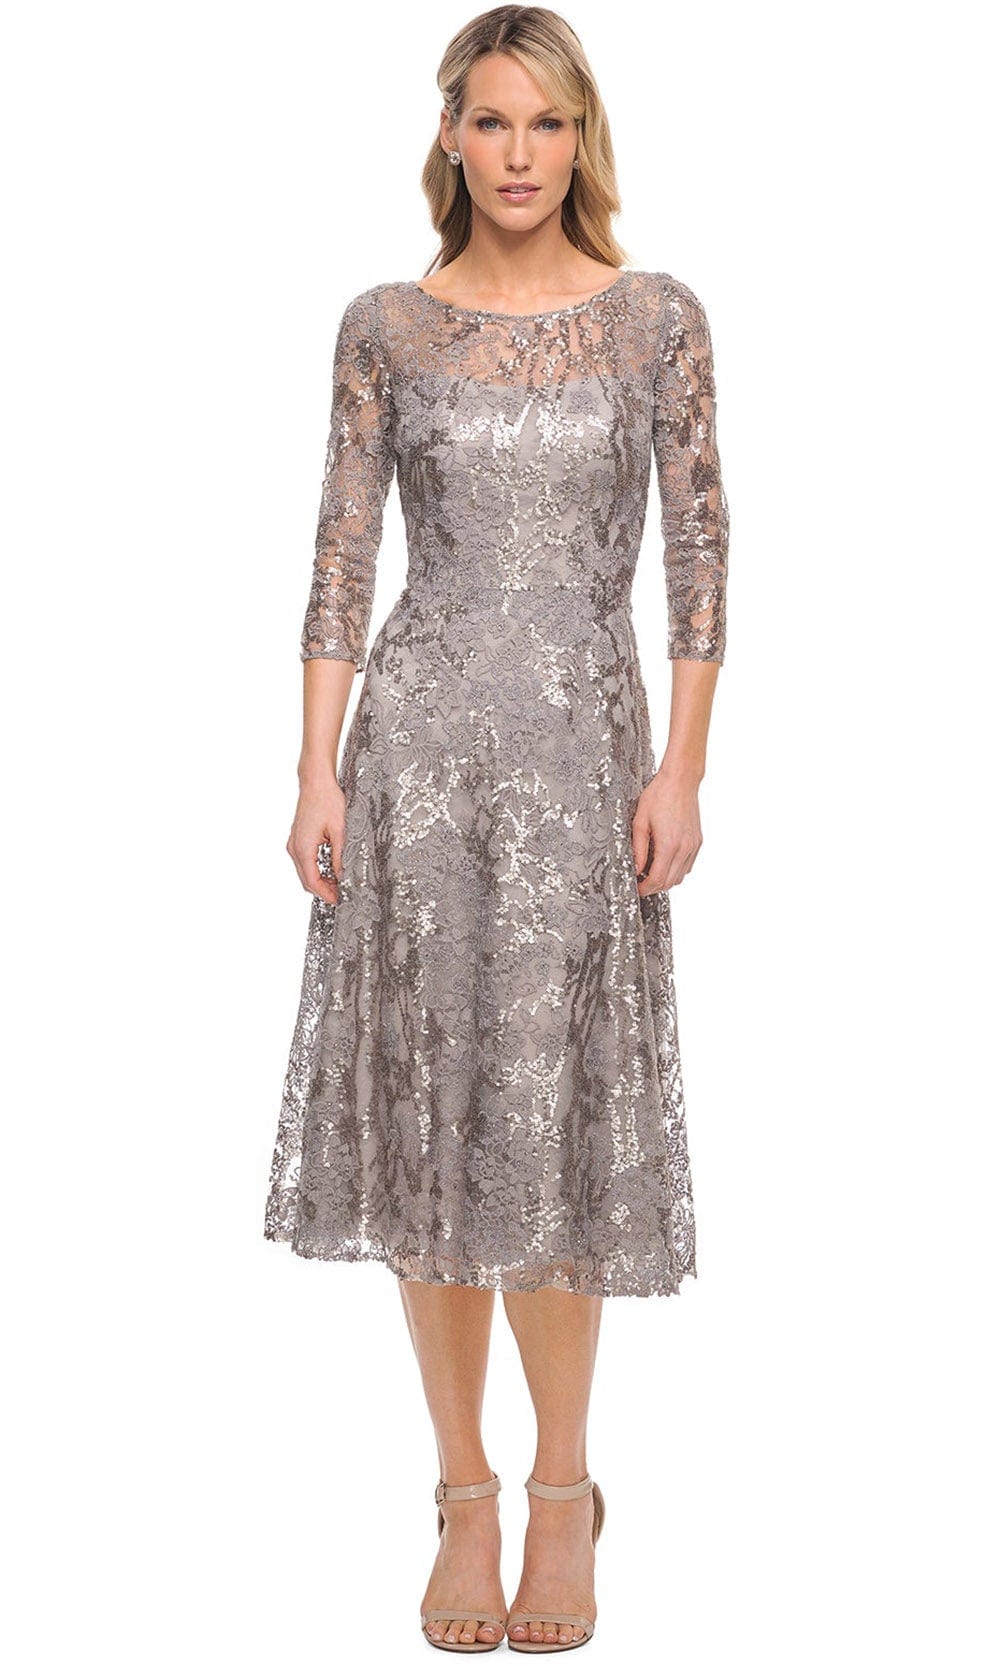 Image of La Femme 29993 - Sparkly Embroidered Tea Length Dress